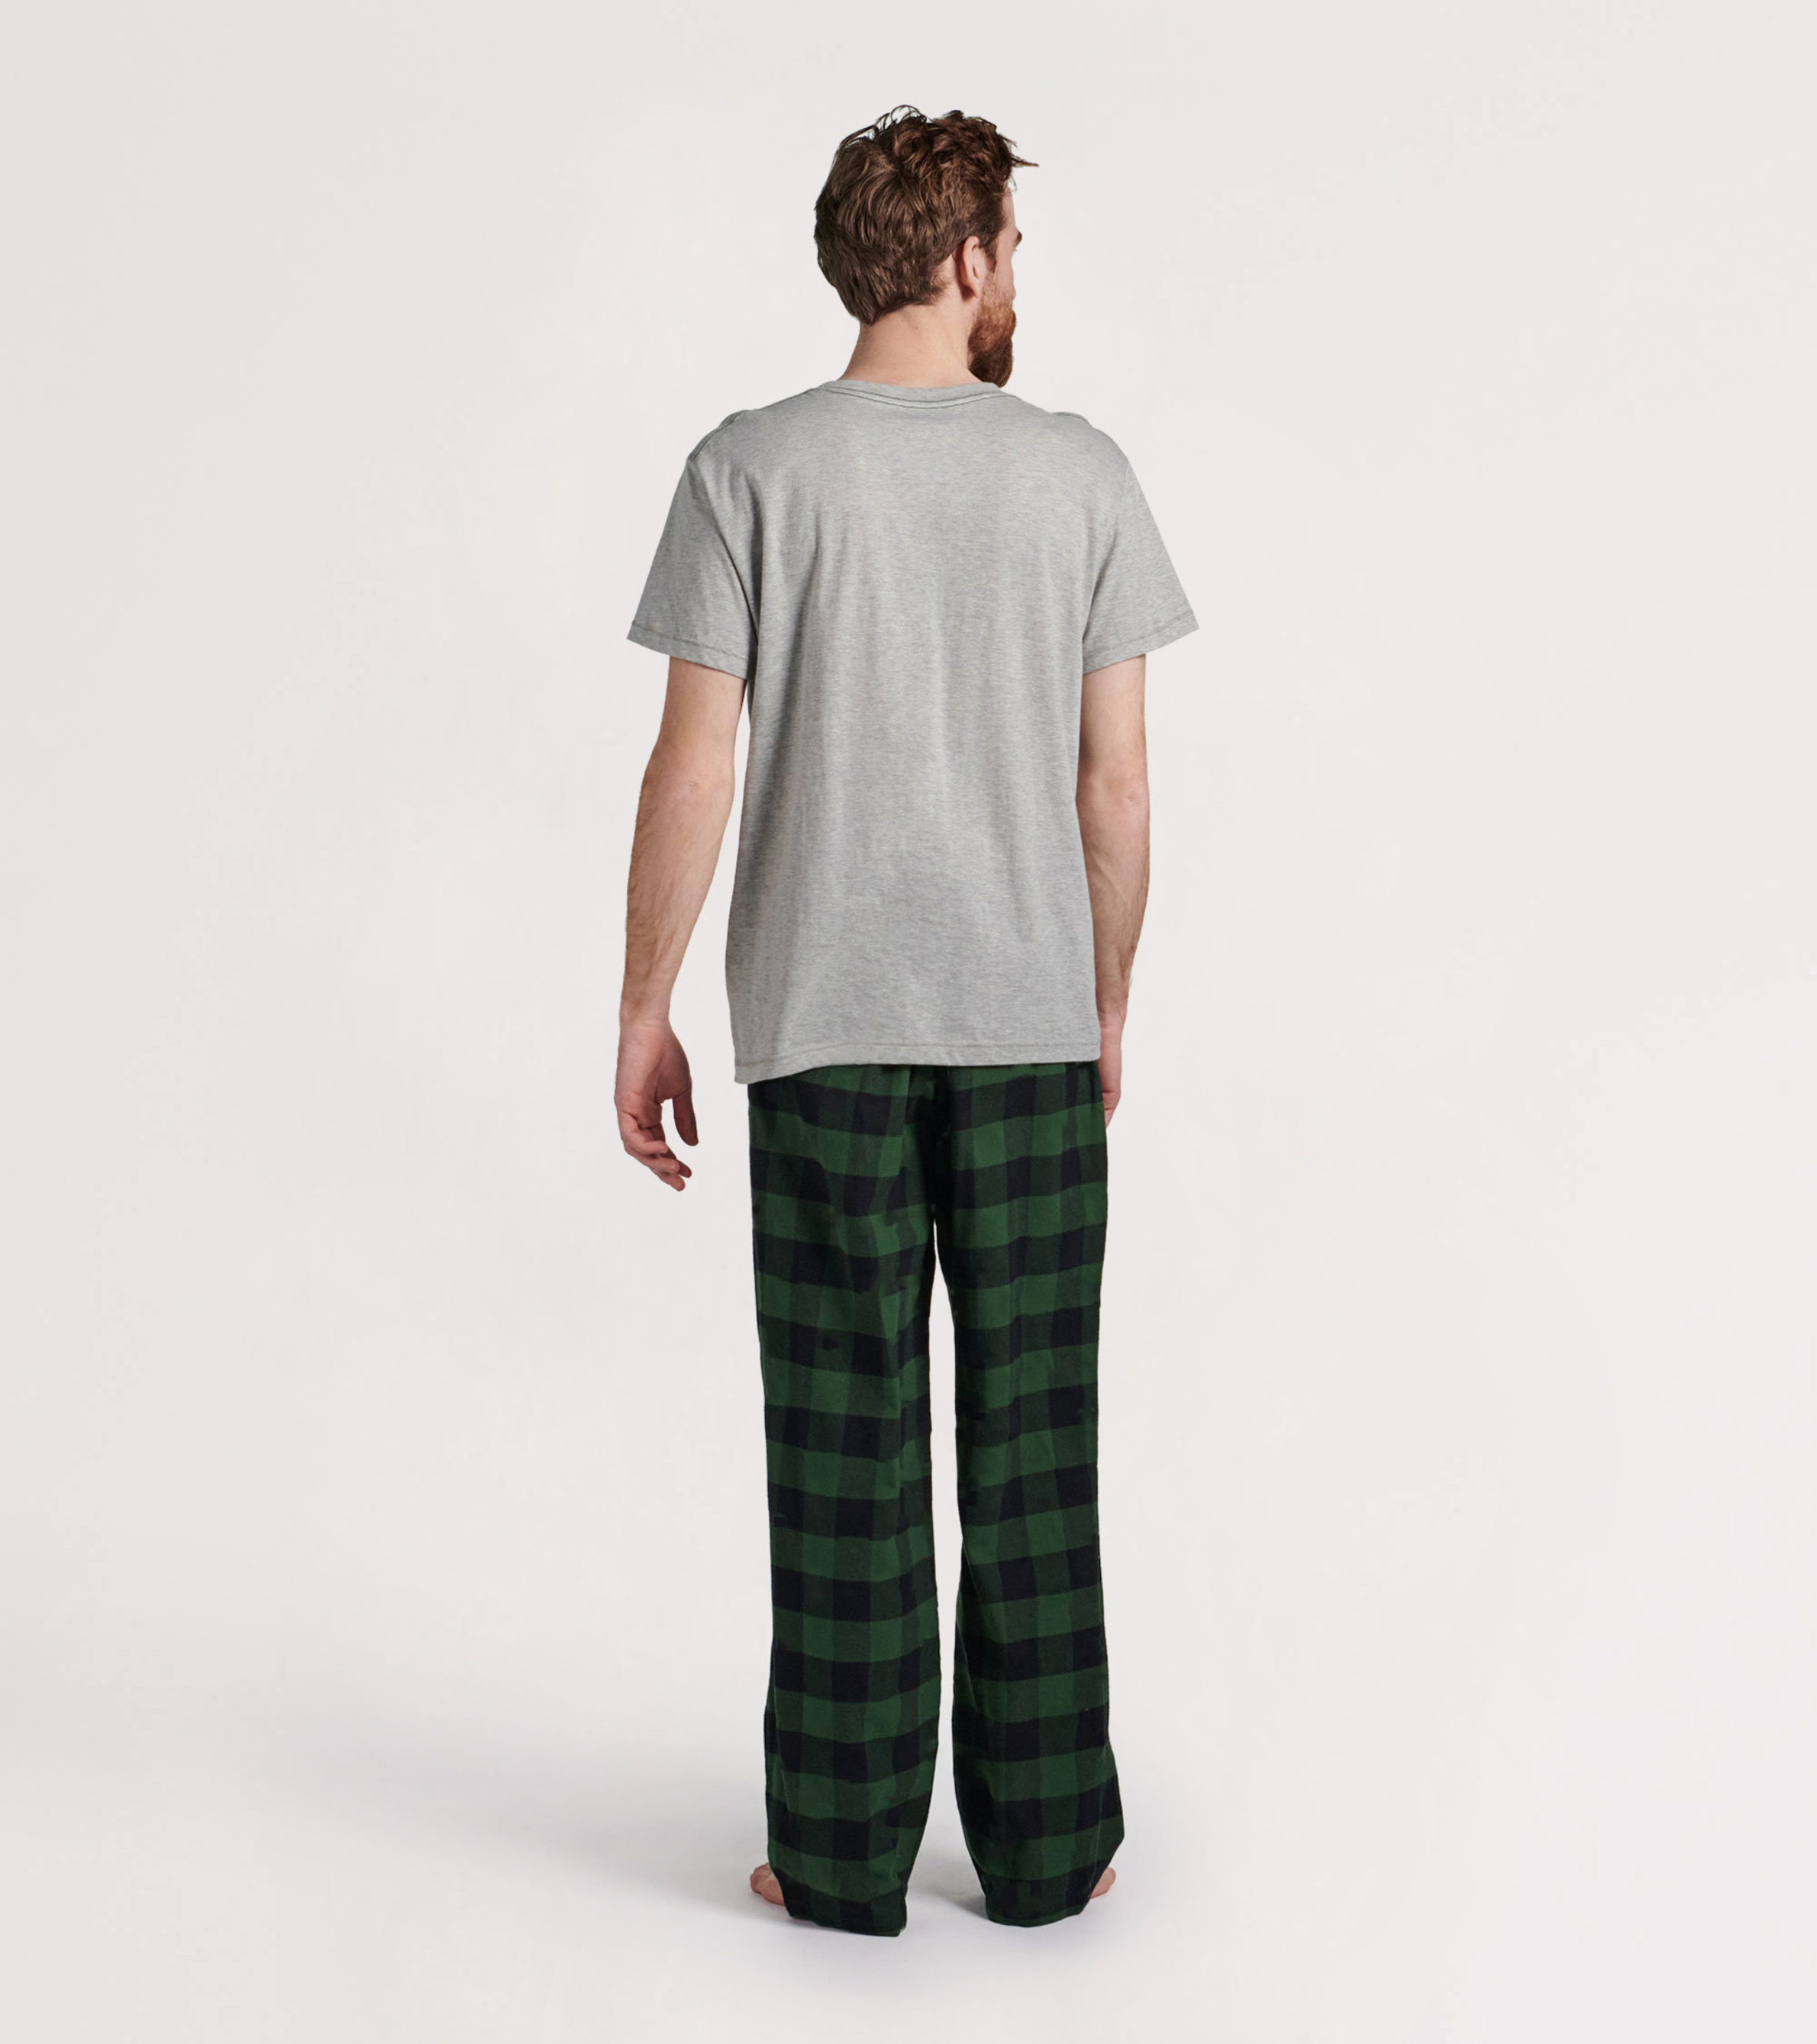 3 Pack: Mens Pajama Pants – Mens Fleece Plaid Lounge Pajama